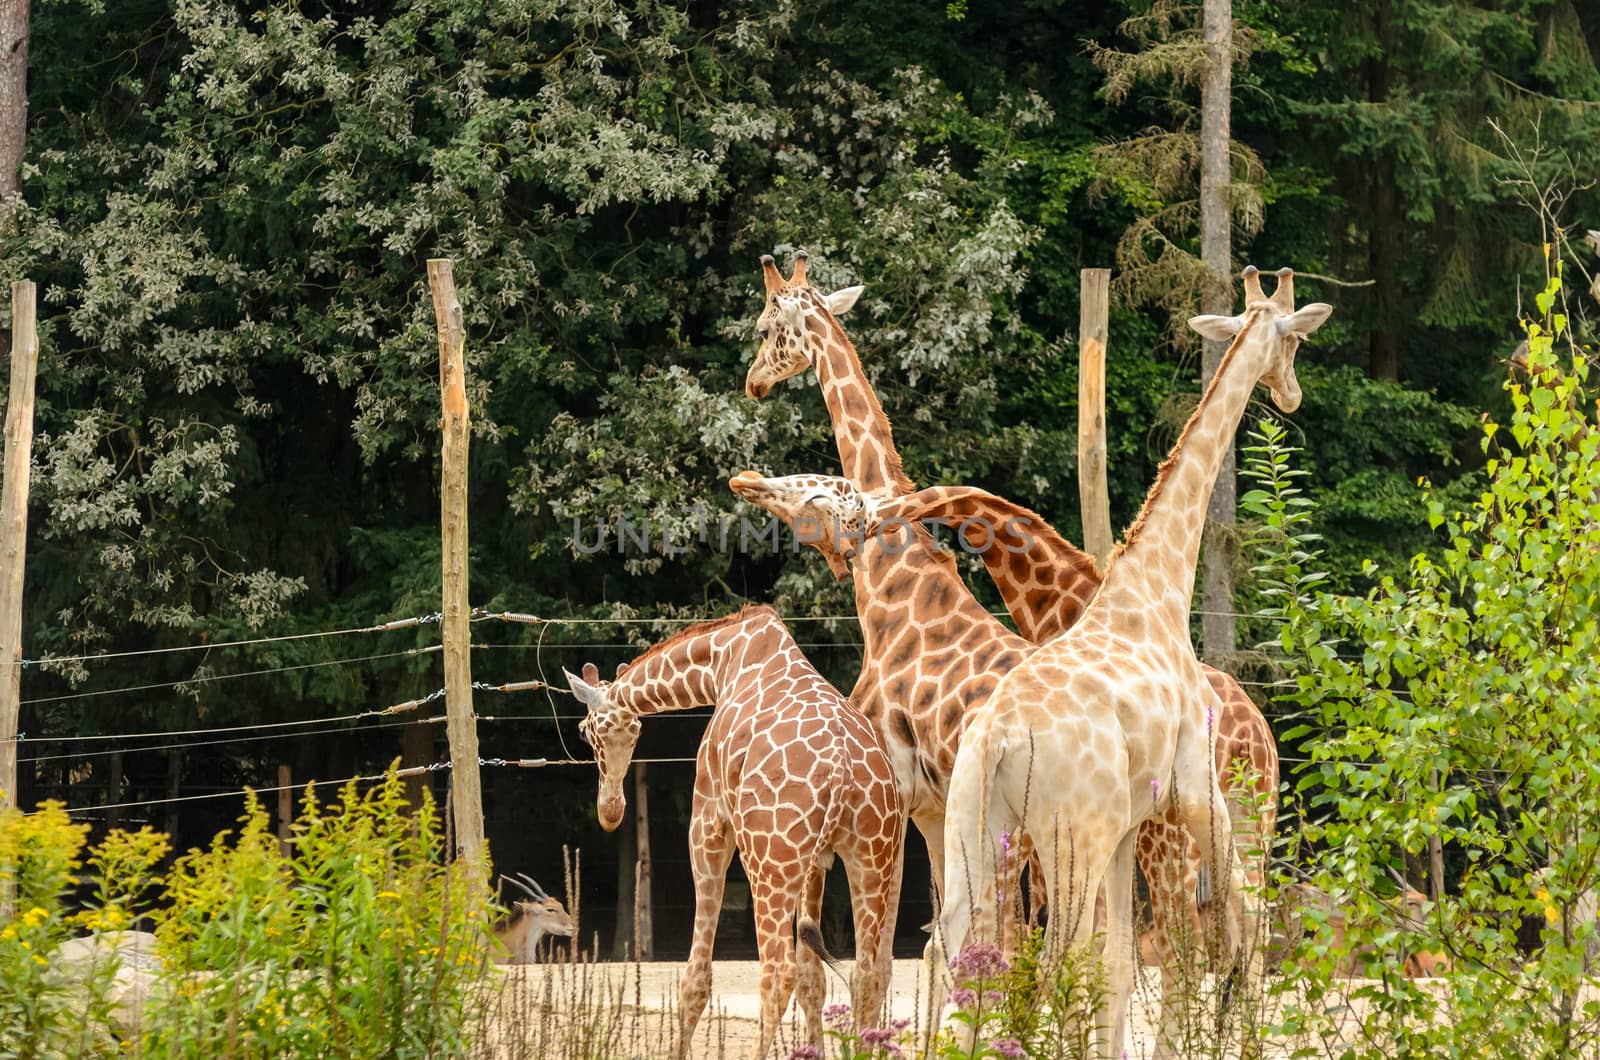 Group of four giraffe showing playful behaviour.